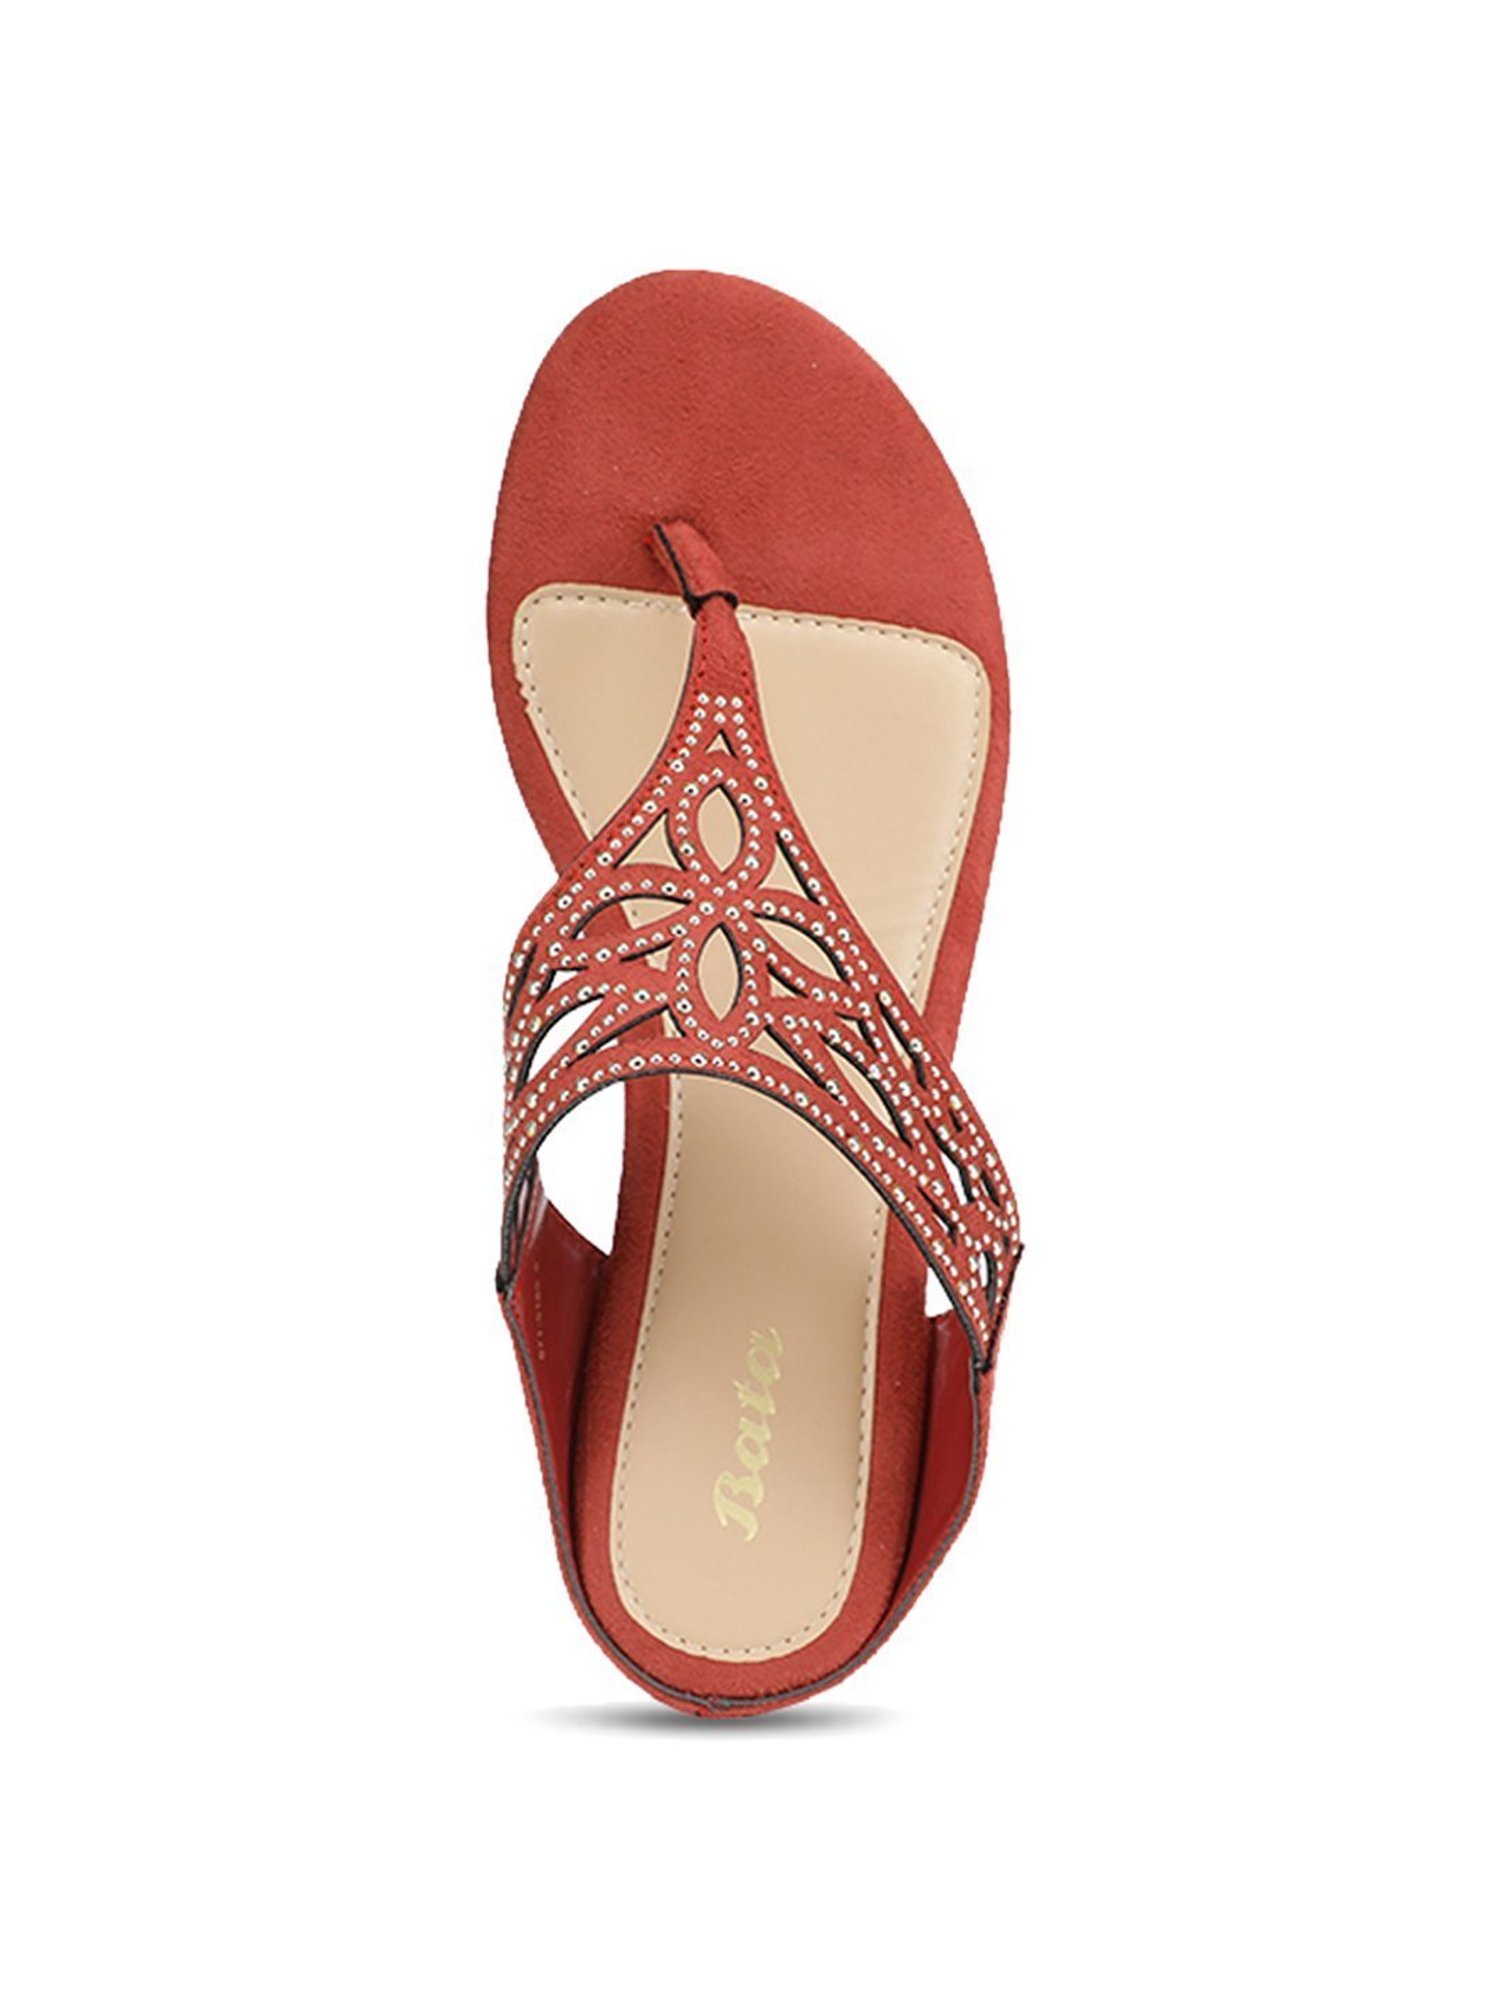 ZAXY Red Sandals For Women - 6 UK : Amazon.in: Fashion